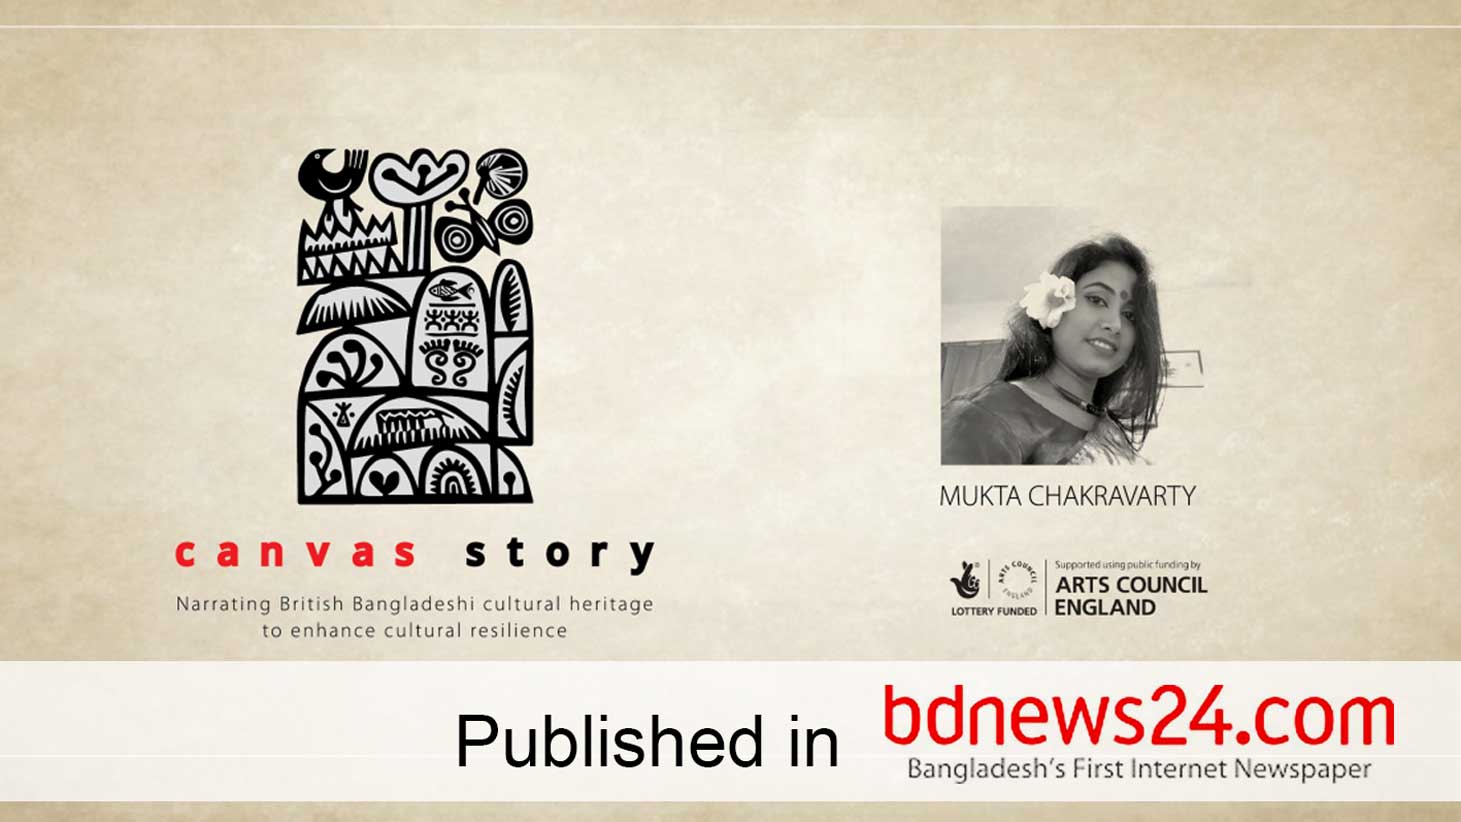 British-Bangladeshi artist Mukta Chakravarty's 'Canvas Story' aims to enhance cultural resilience